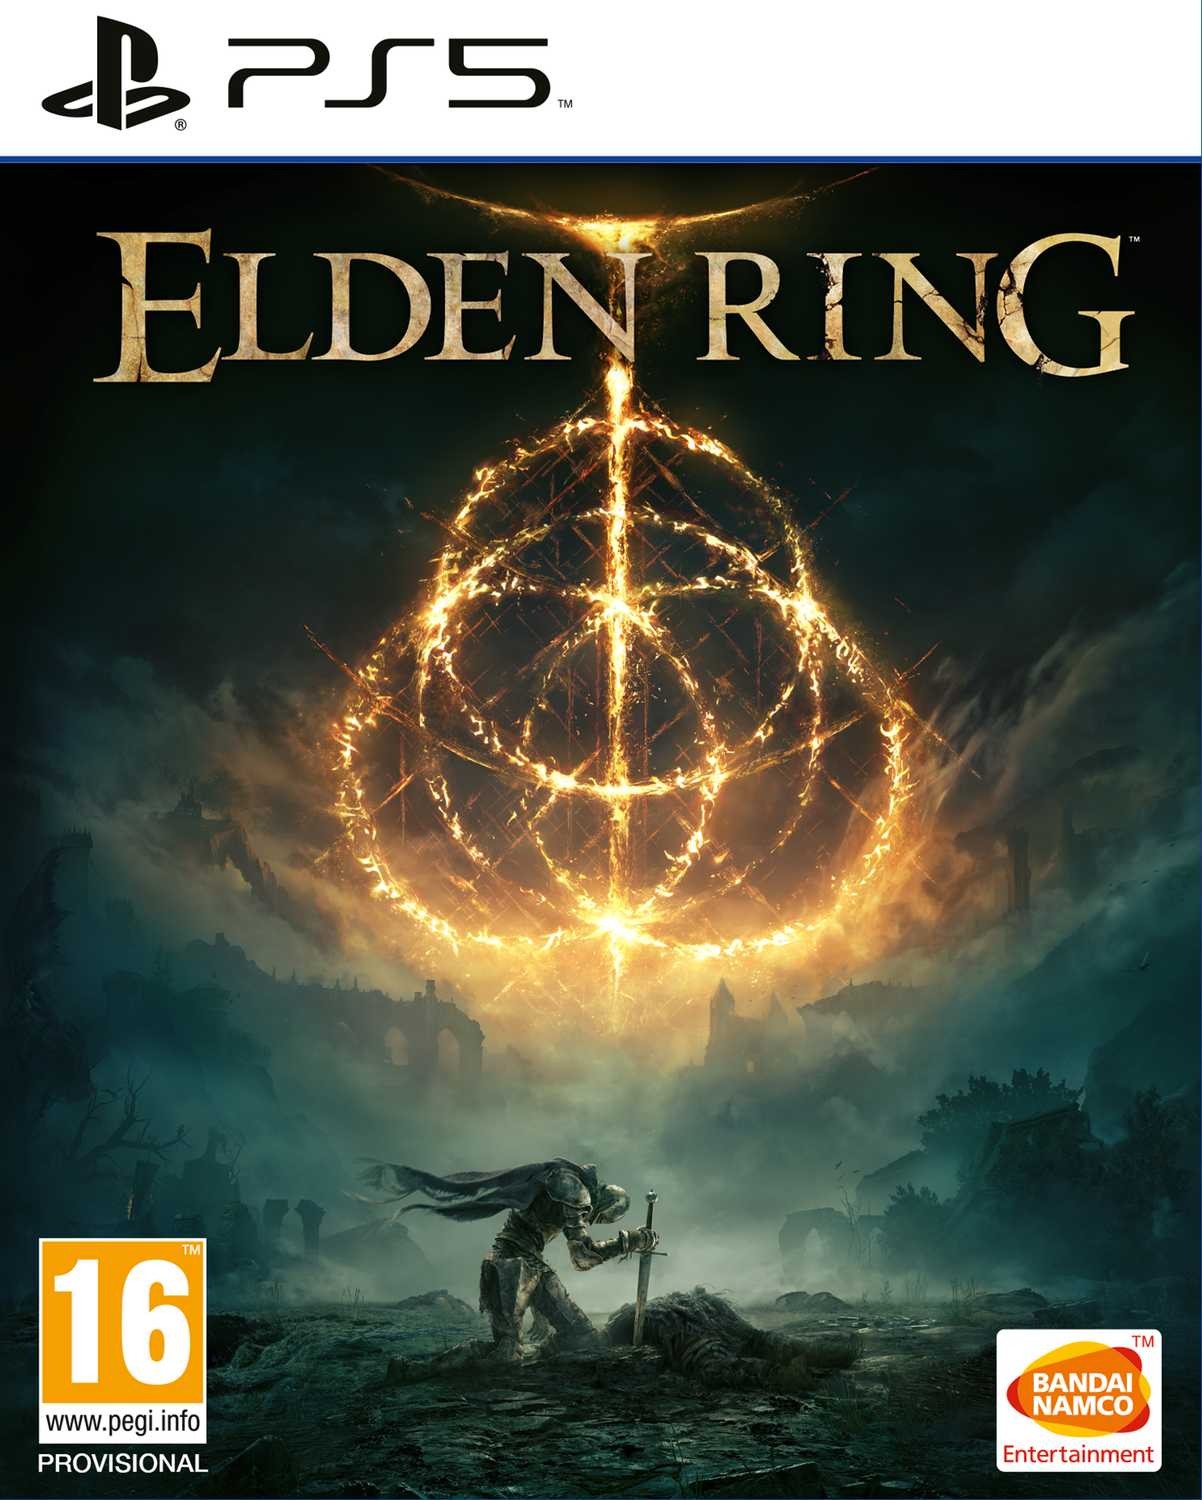 Elden Ring Launch Edition (PS5)